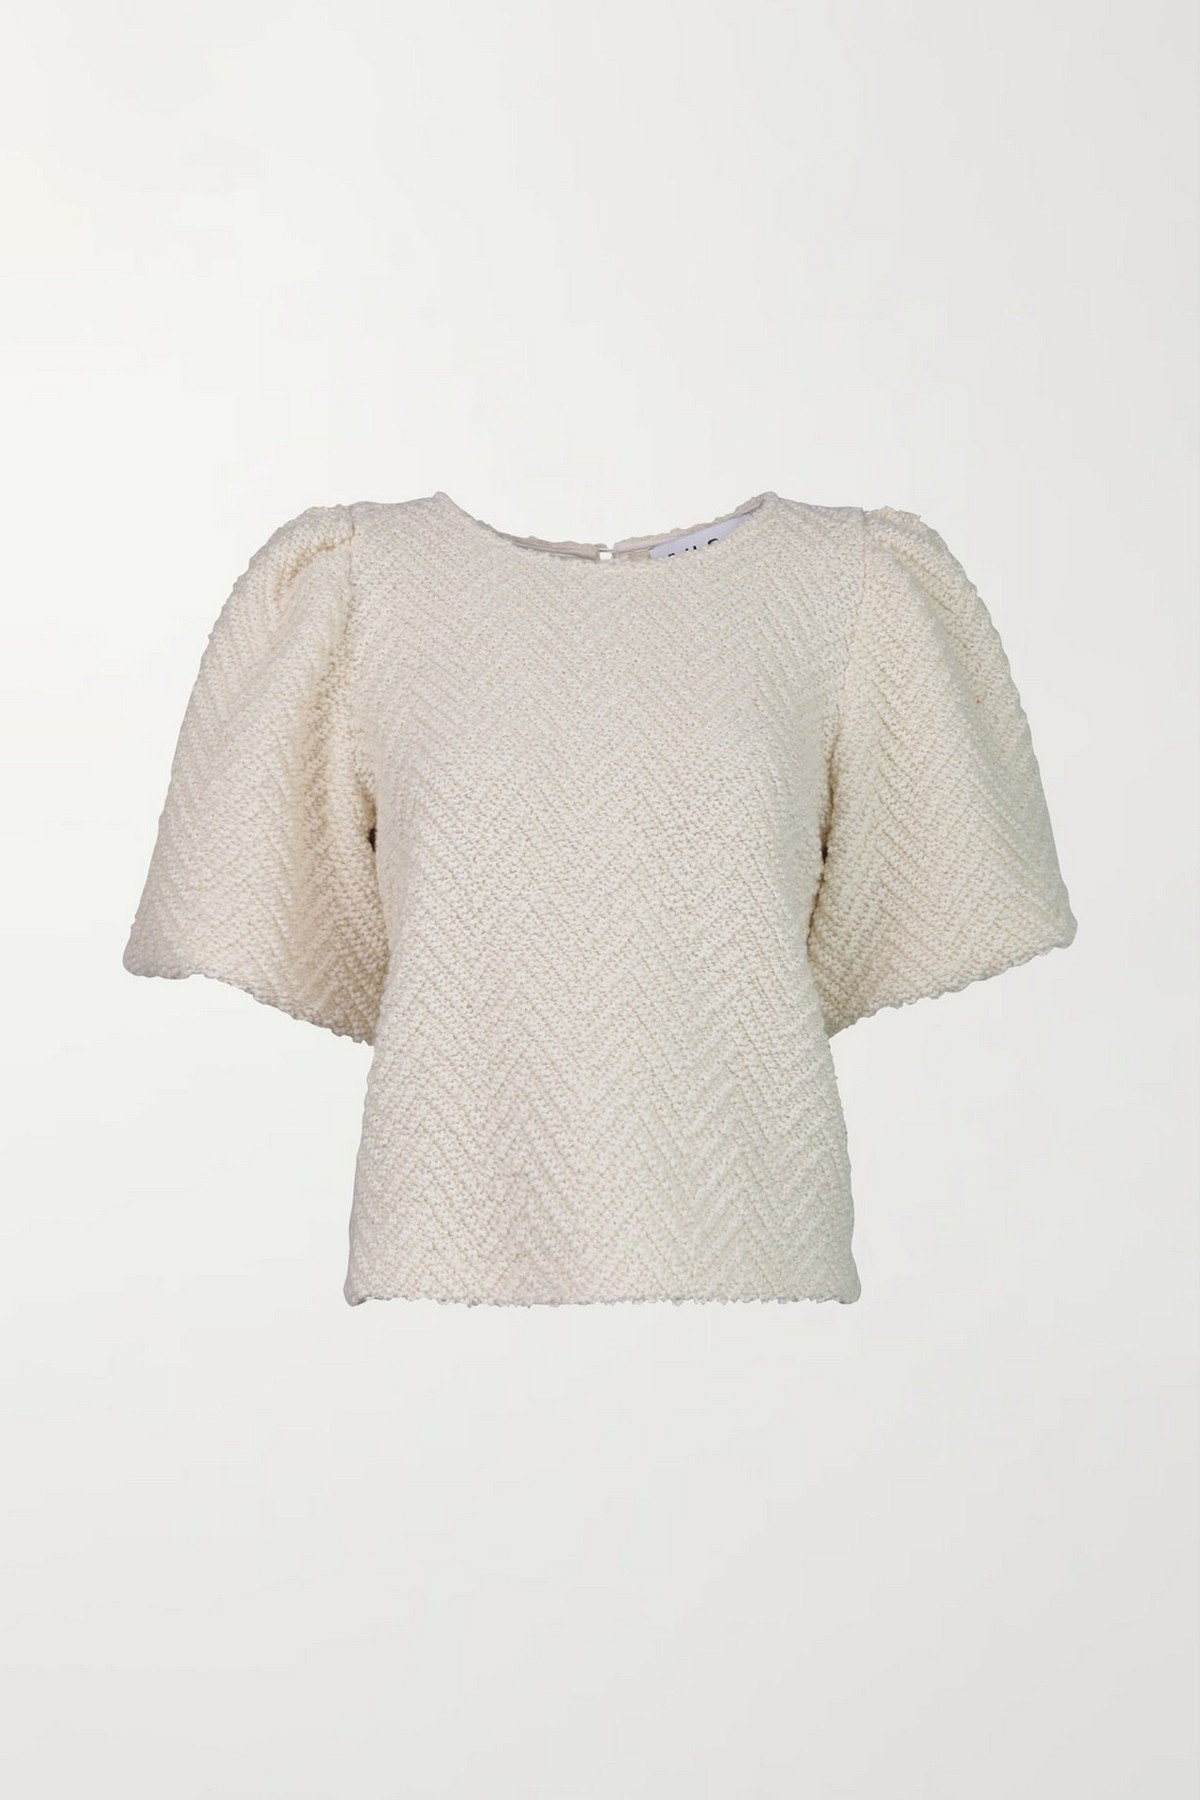 Justeve - Elizabeth blouse - Top gebreid V motief cream - uitverkocht